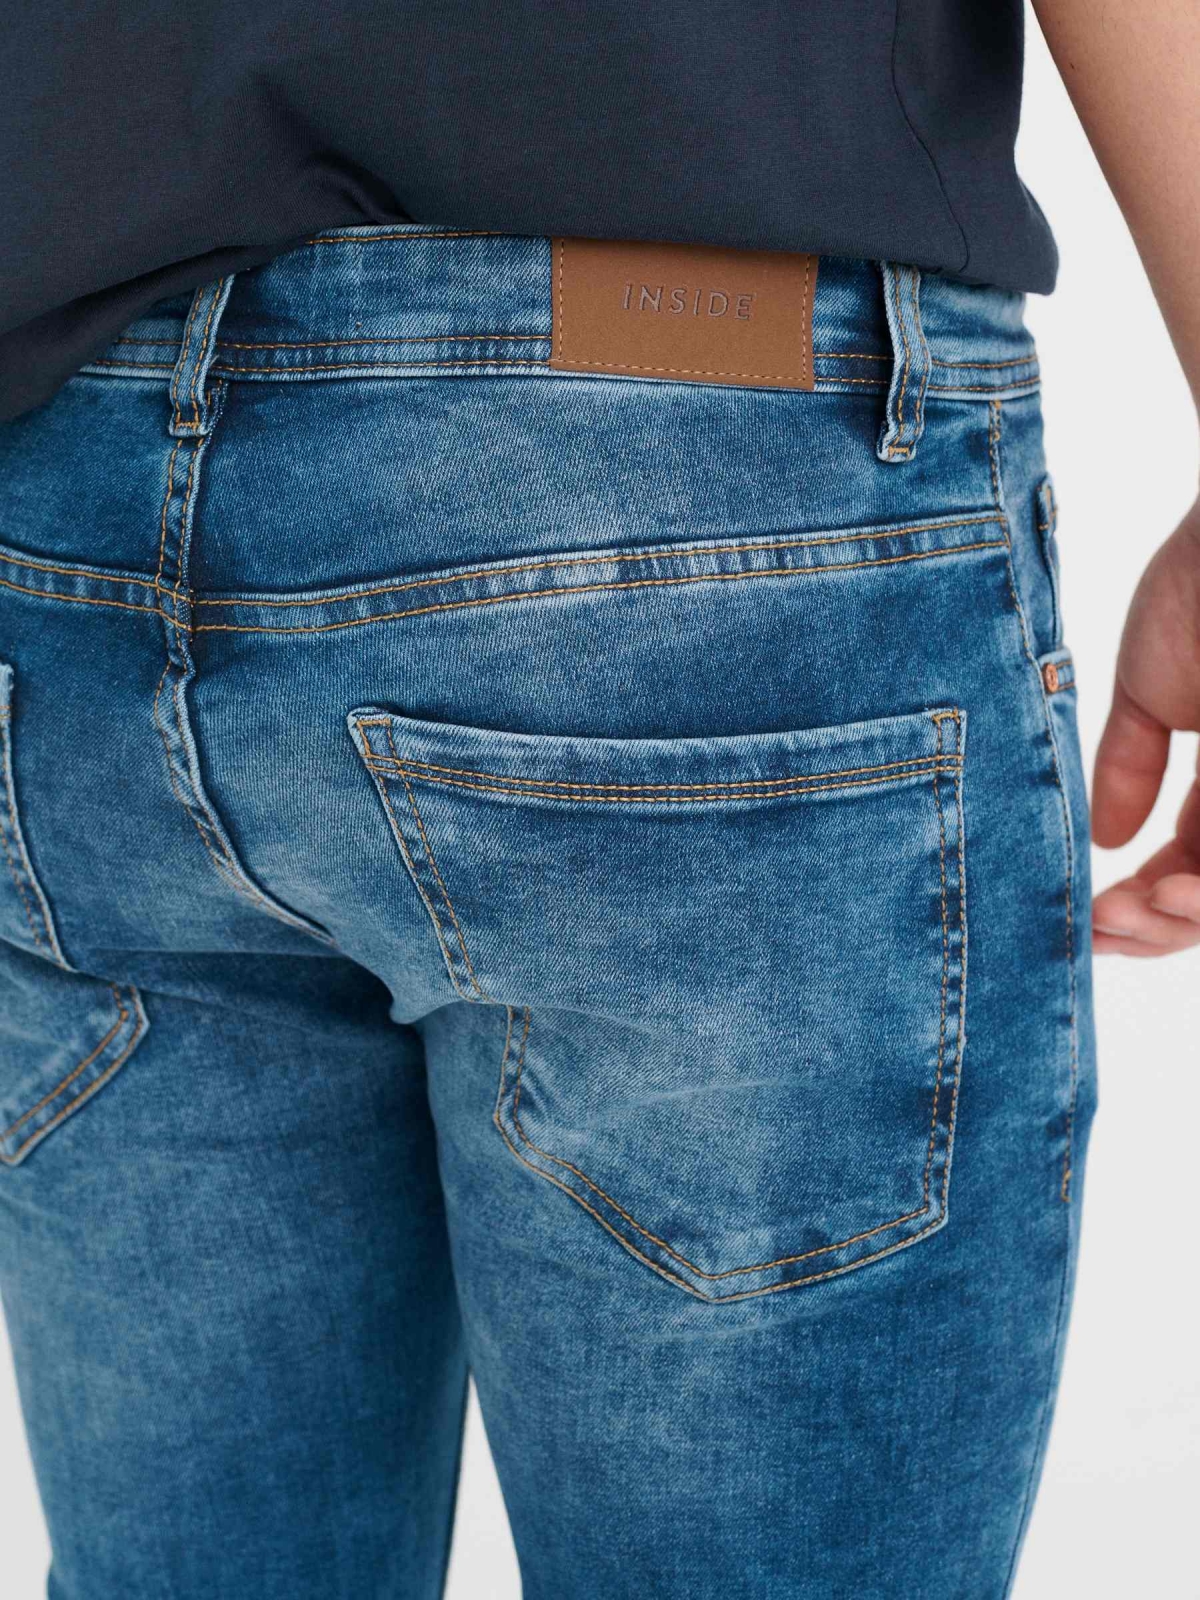 Washed blue super slim jeans blue detail view